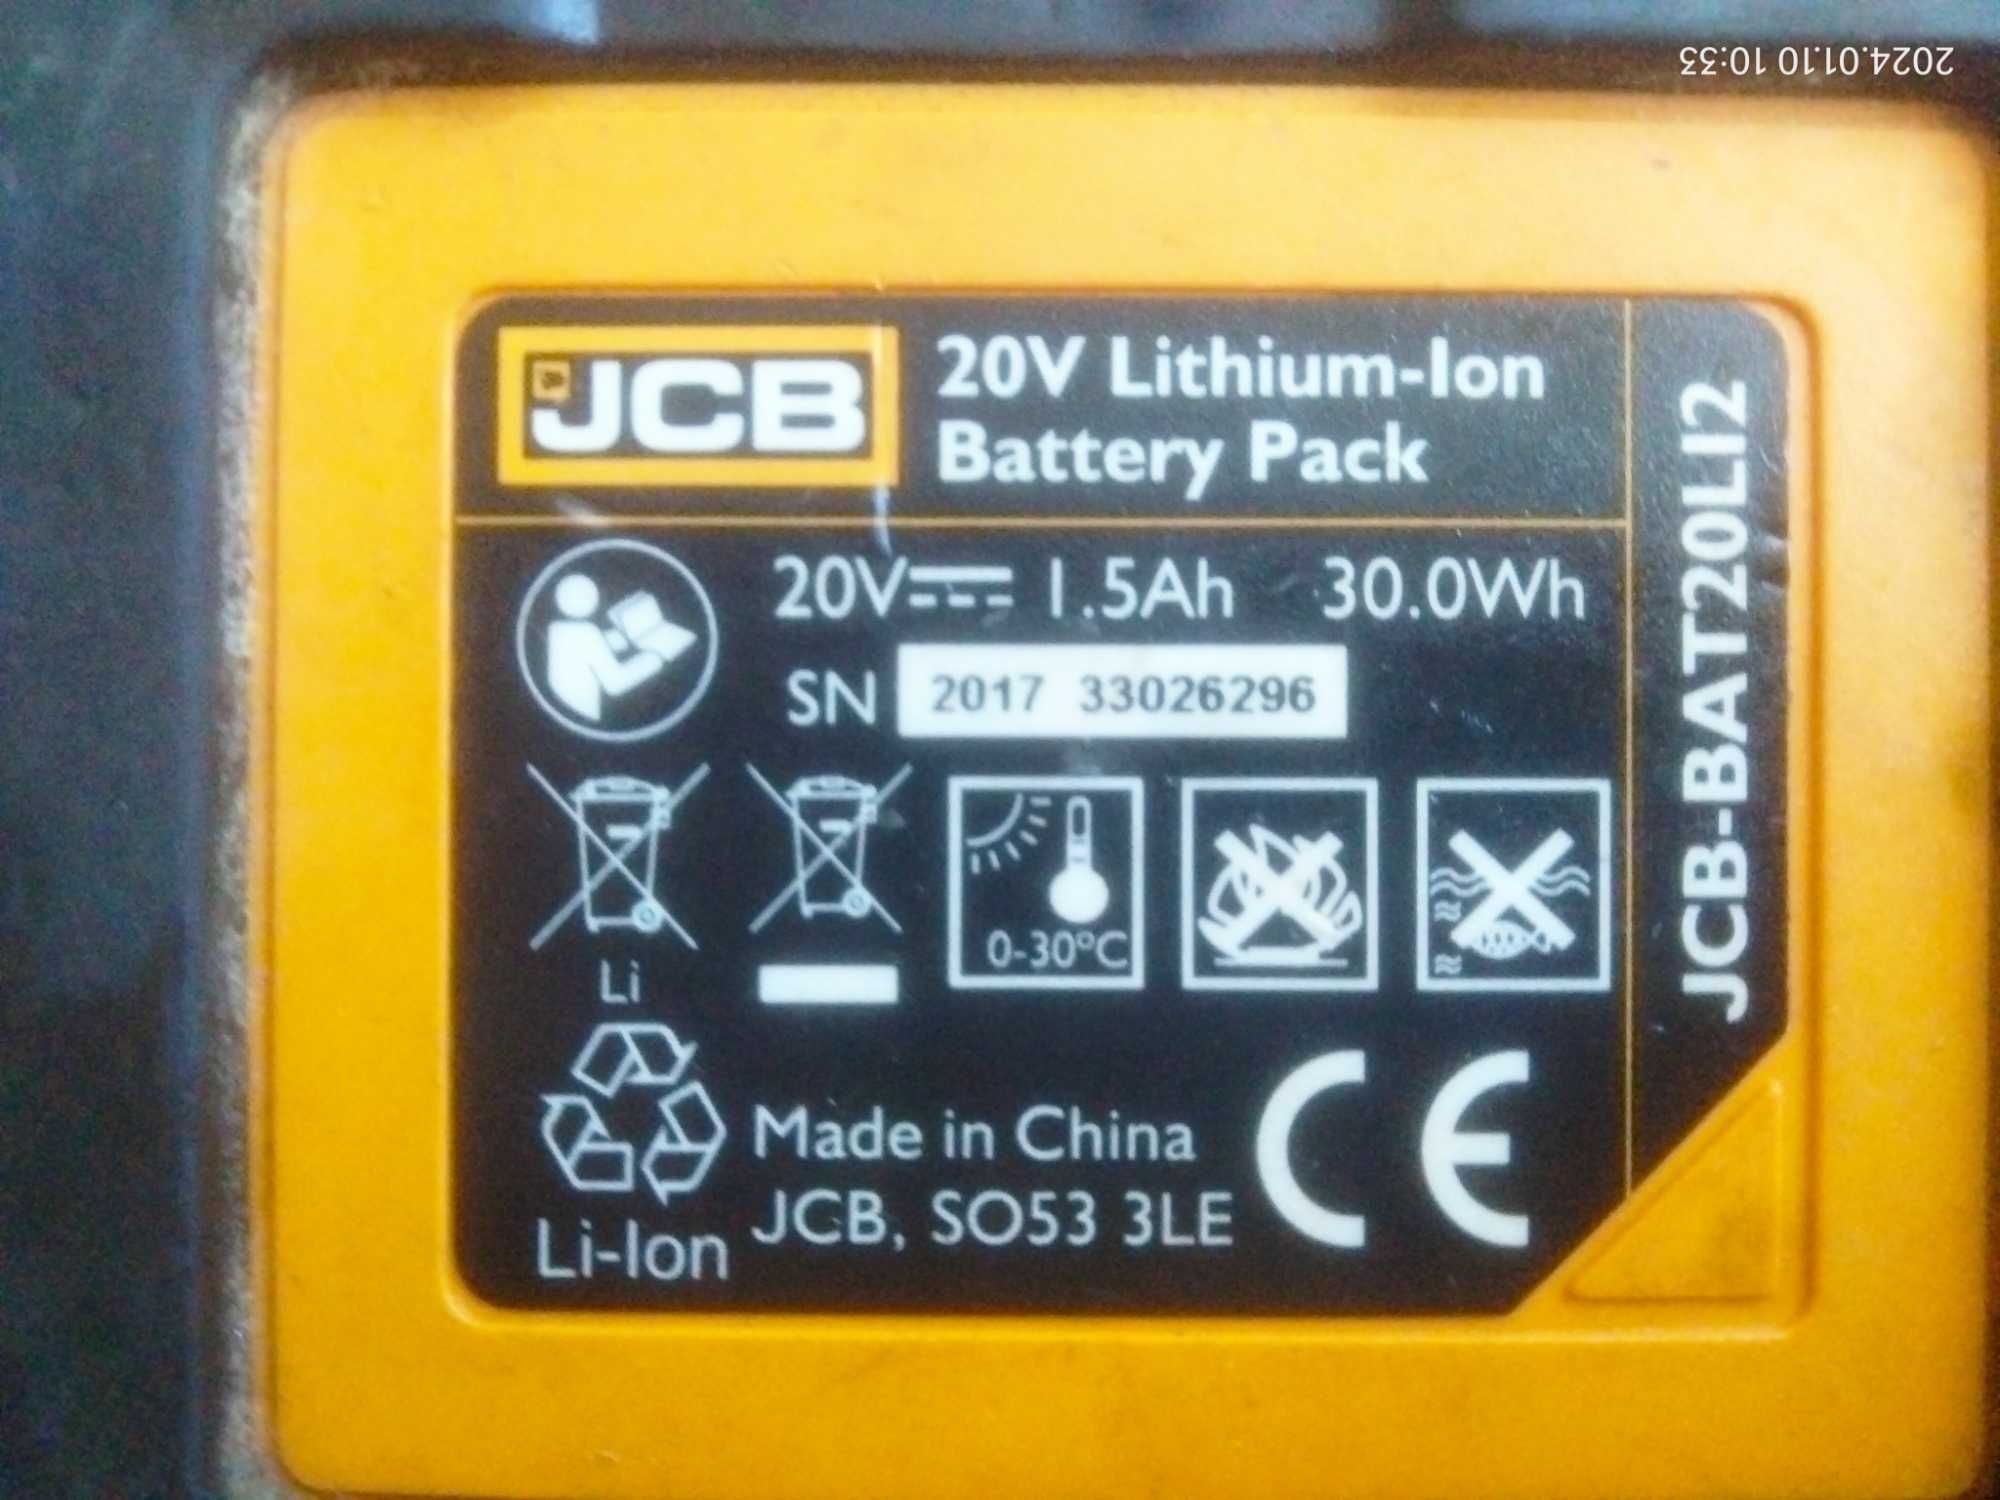 Baterii bormasina JCB si incarcator